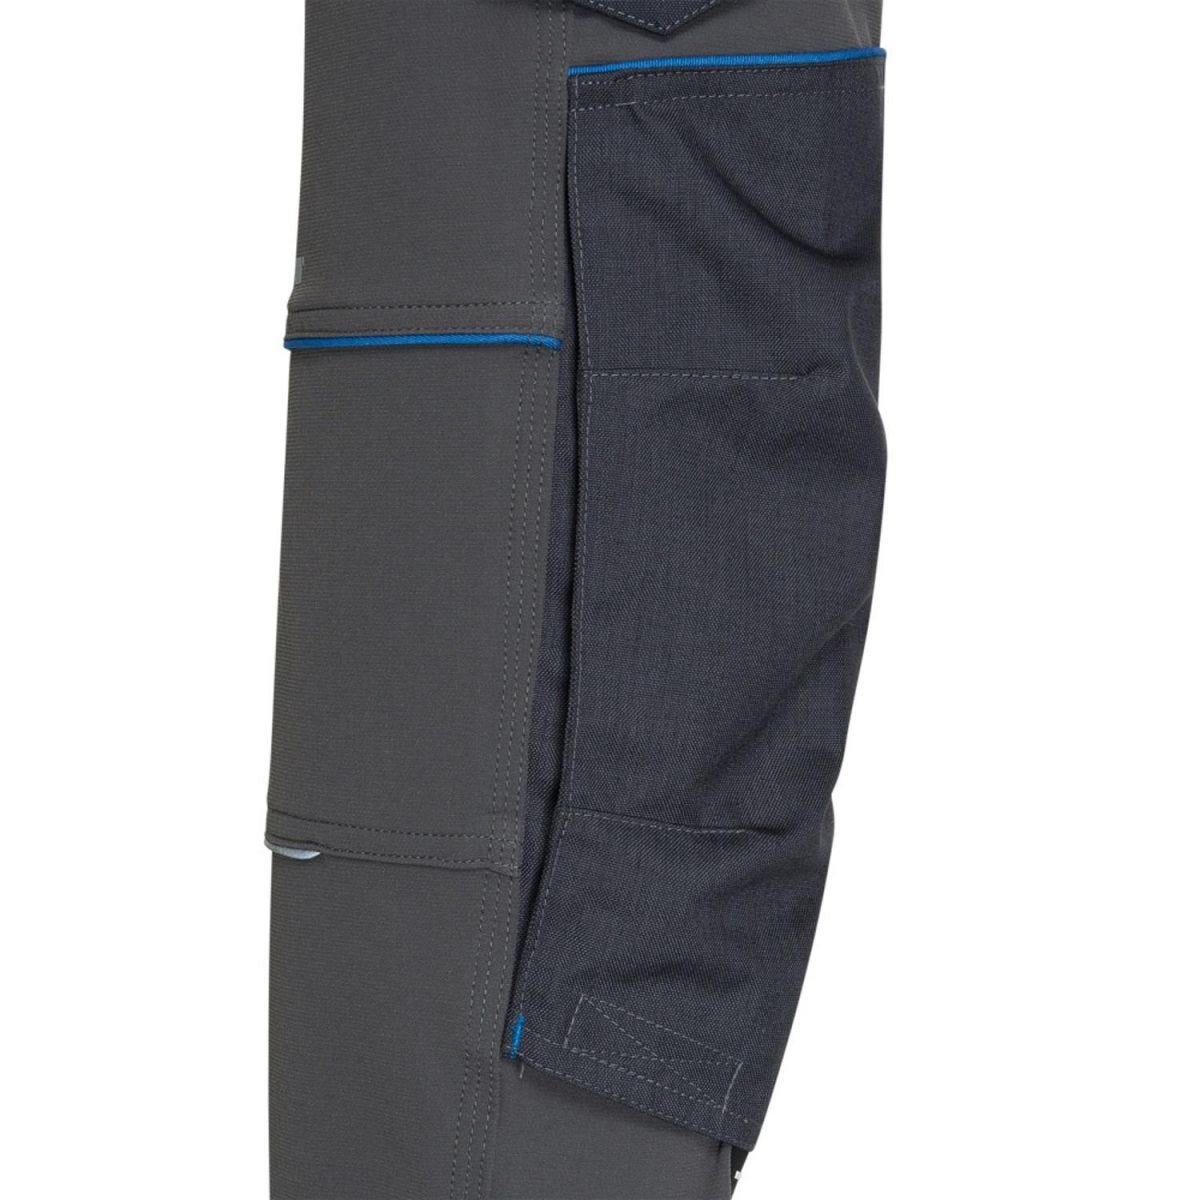 Pantalon de travail SACHA gris/bleu - North Ways - Taille 46 4